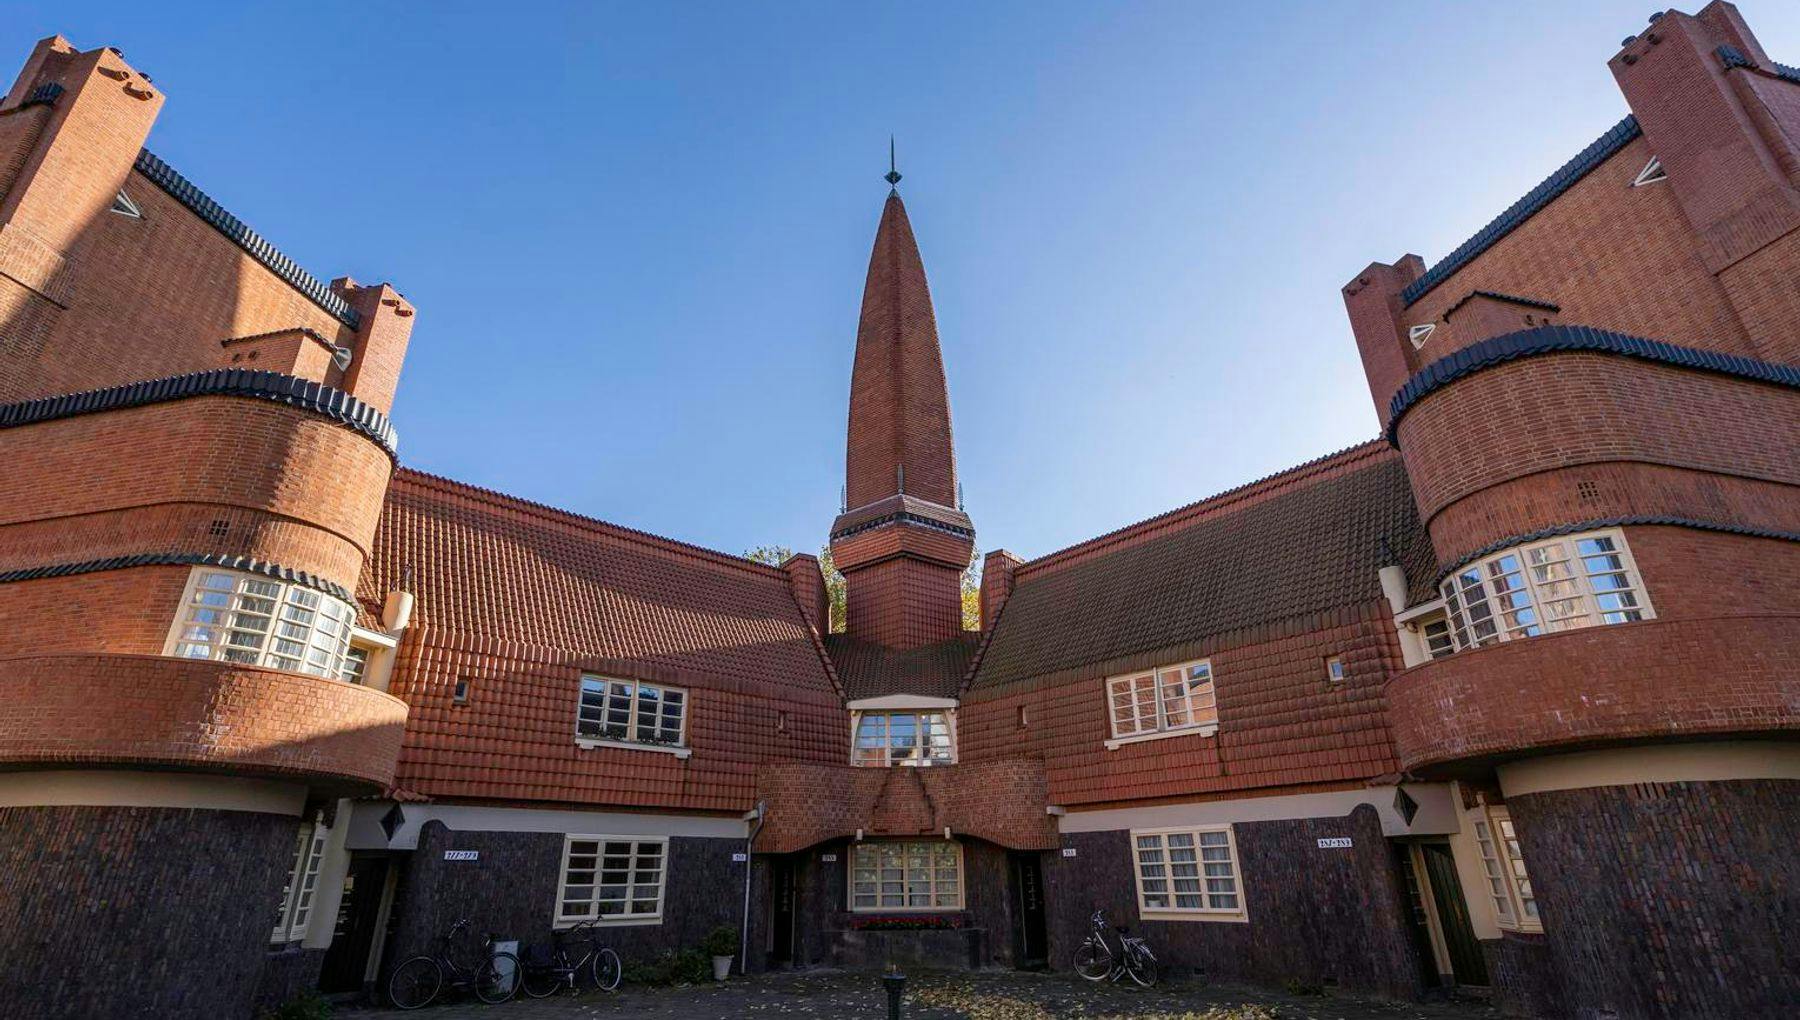 Museum Het Schip under a clear blue sky, located at Oostzaanstraat, Spaarndammerbuurt.